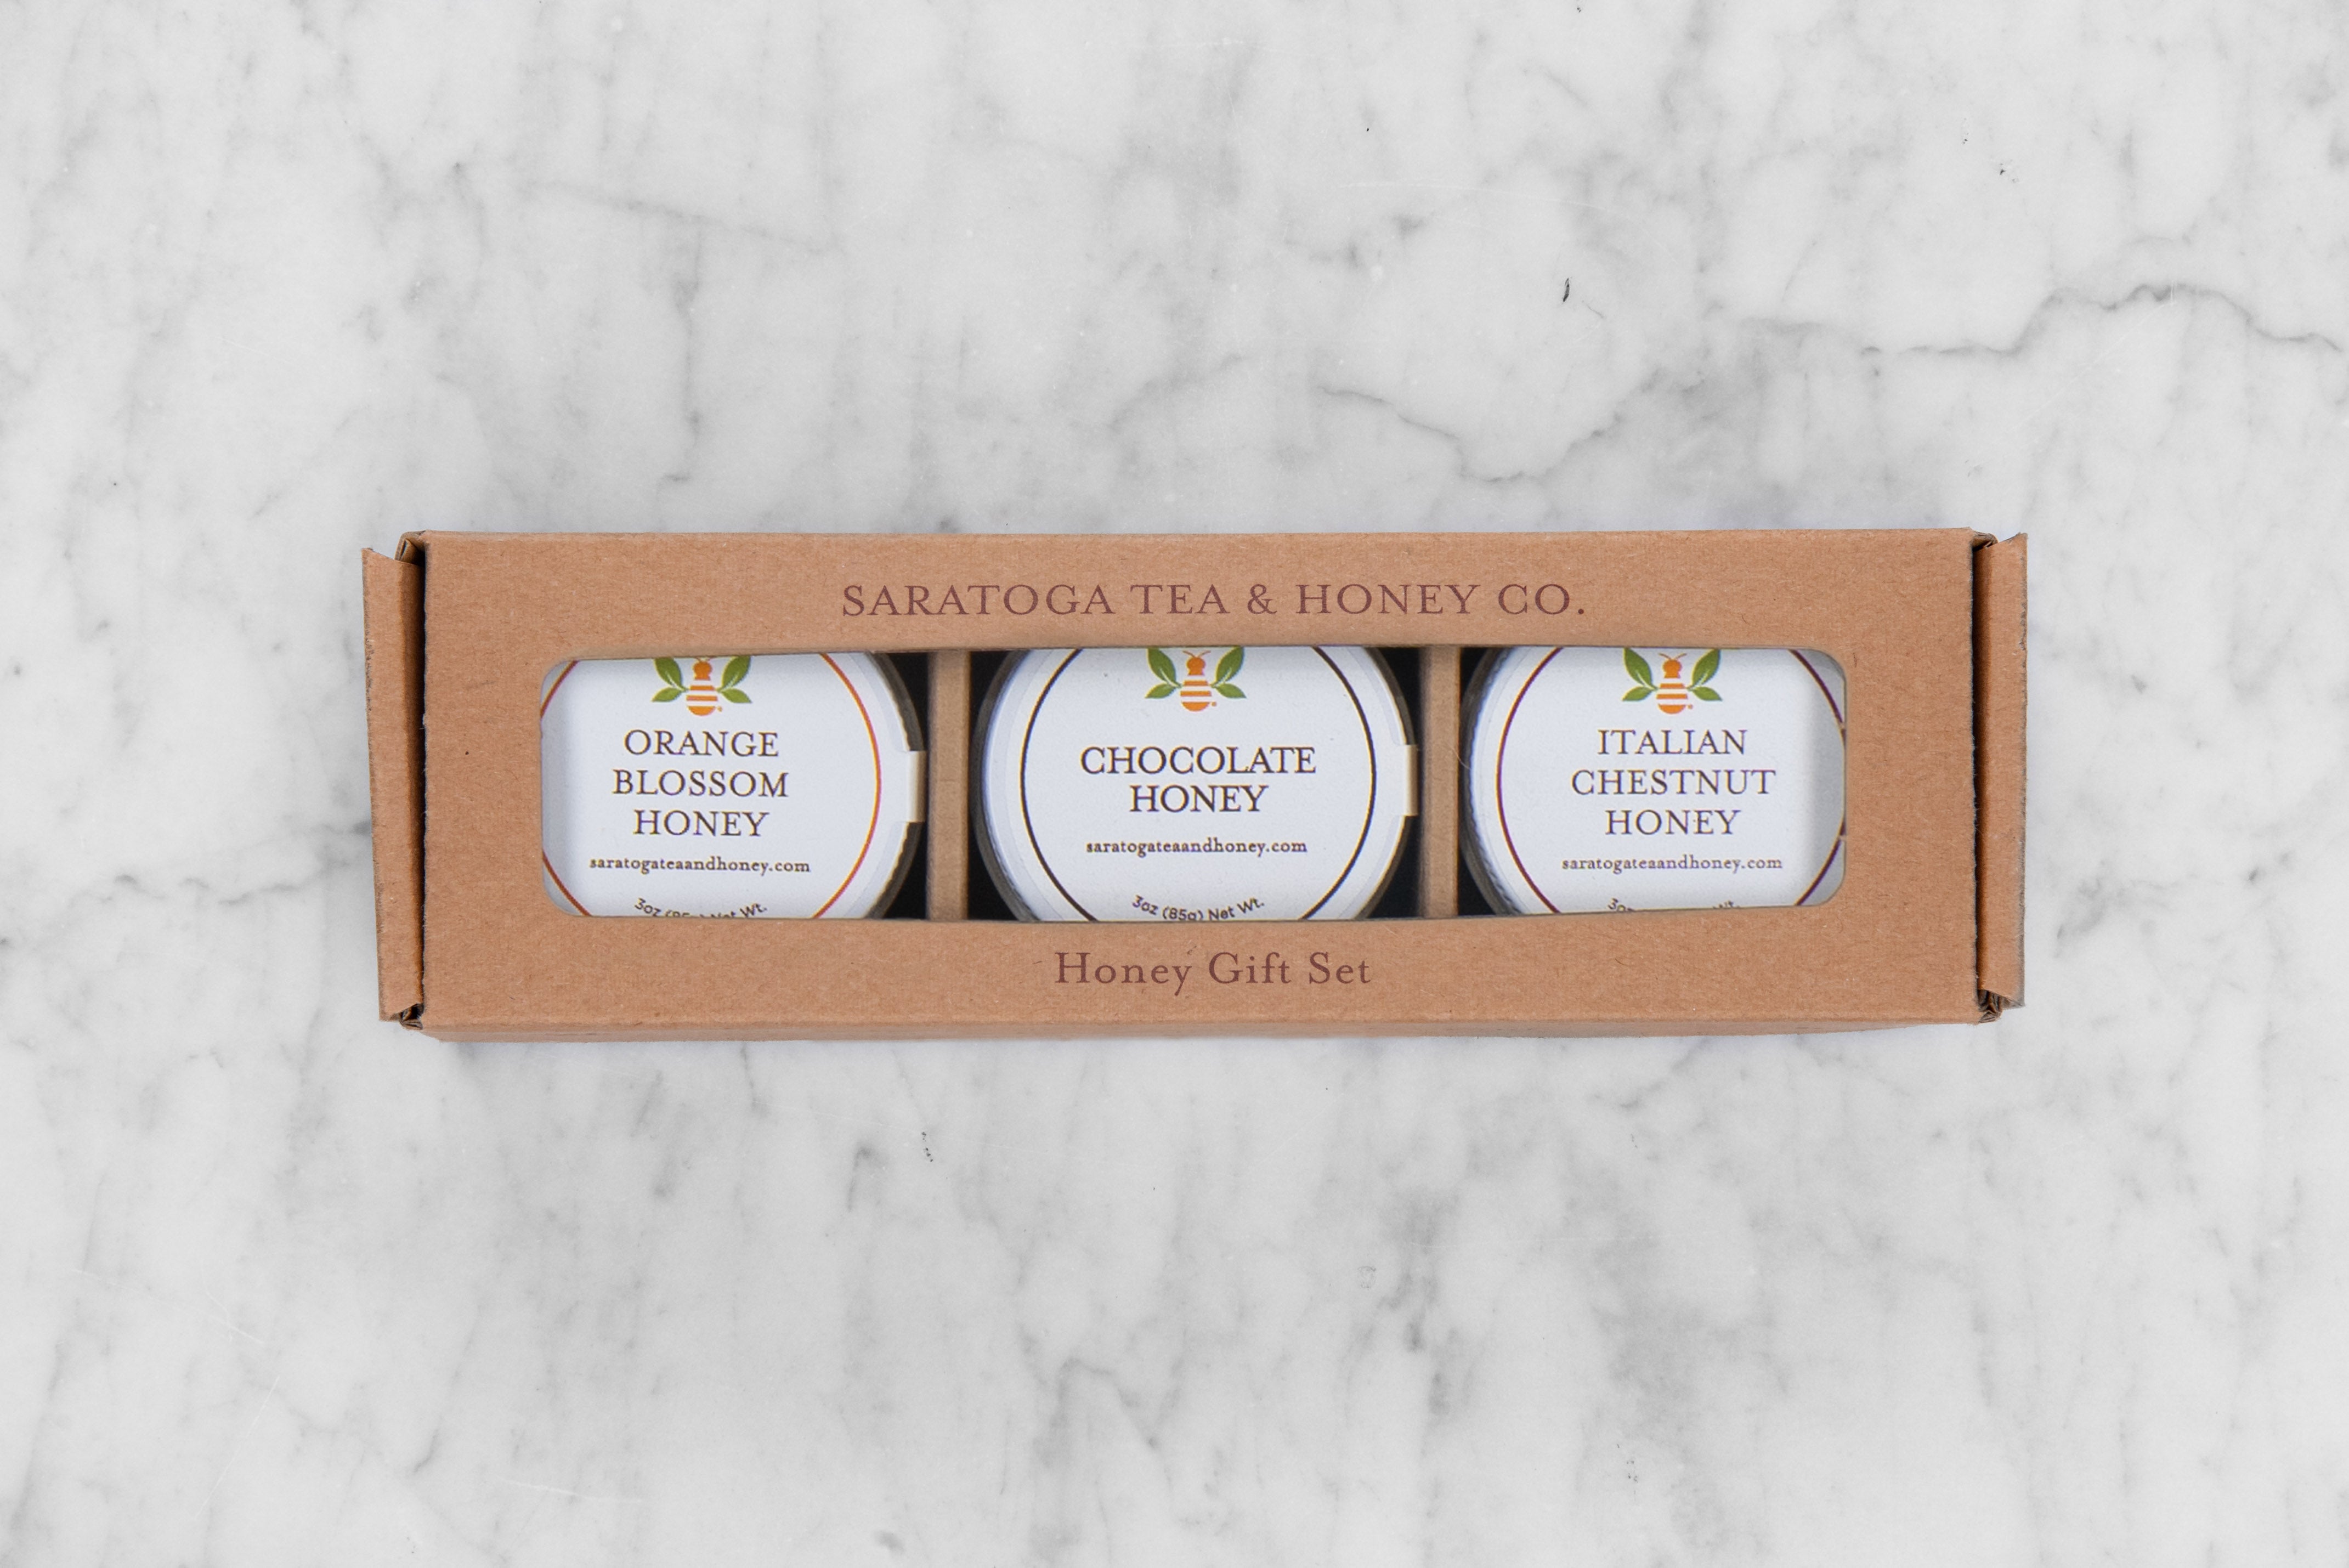 three pack honey sample set featuring orange blossom, chocolate, and Italian chestnut honeys